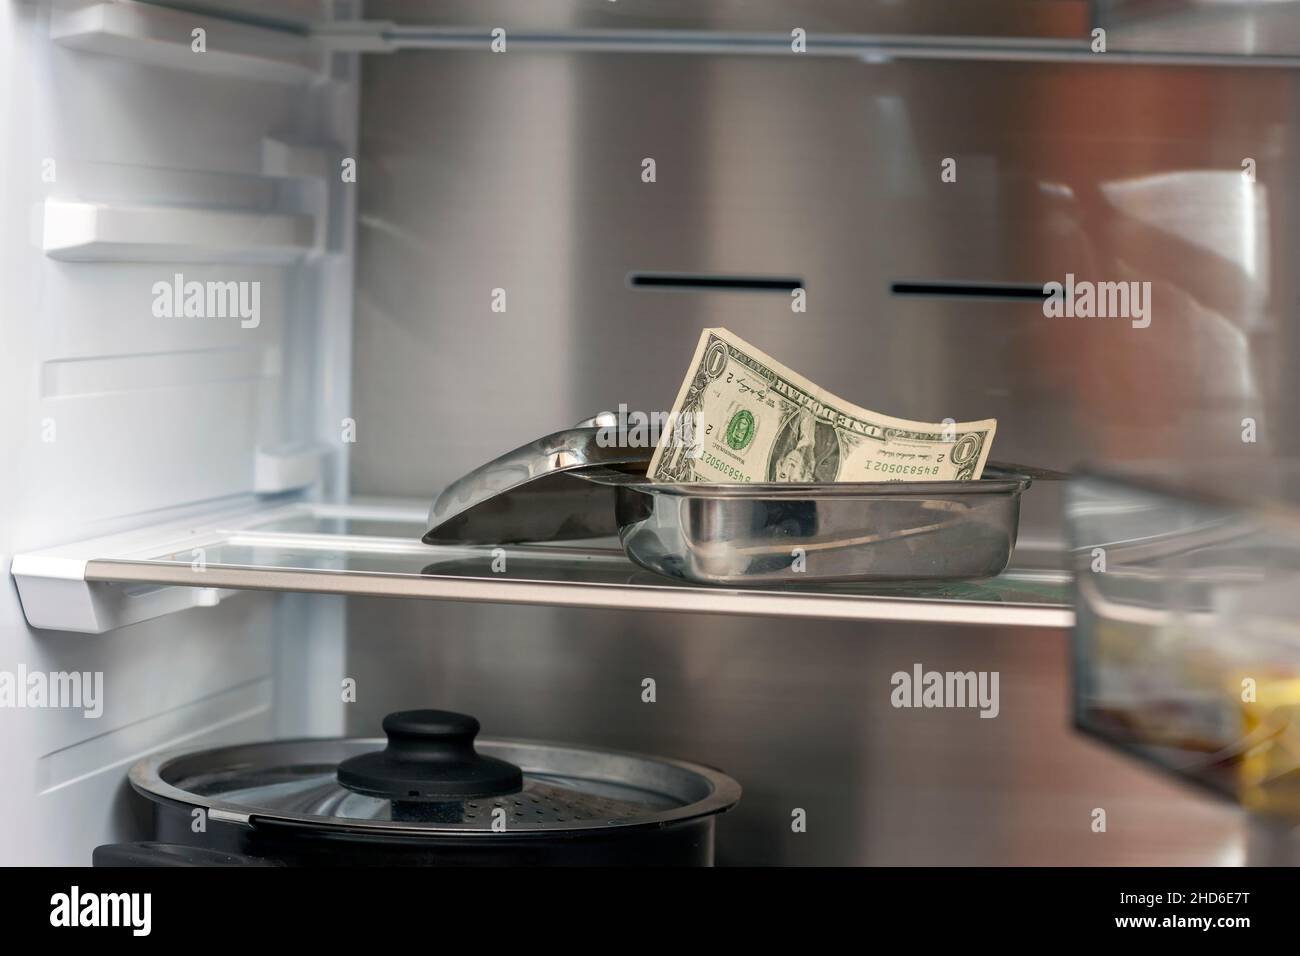 one dollar bill inside a fridge, concept of no money left for shopping Stock Photo